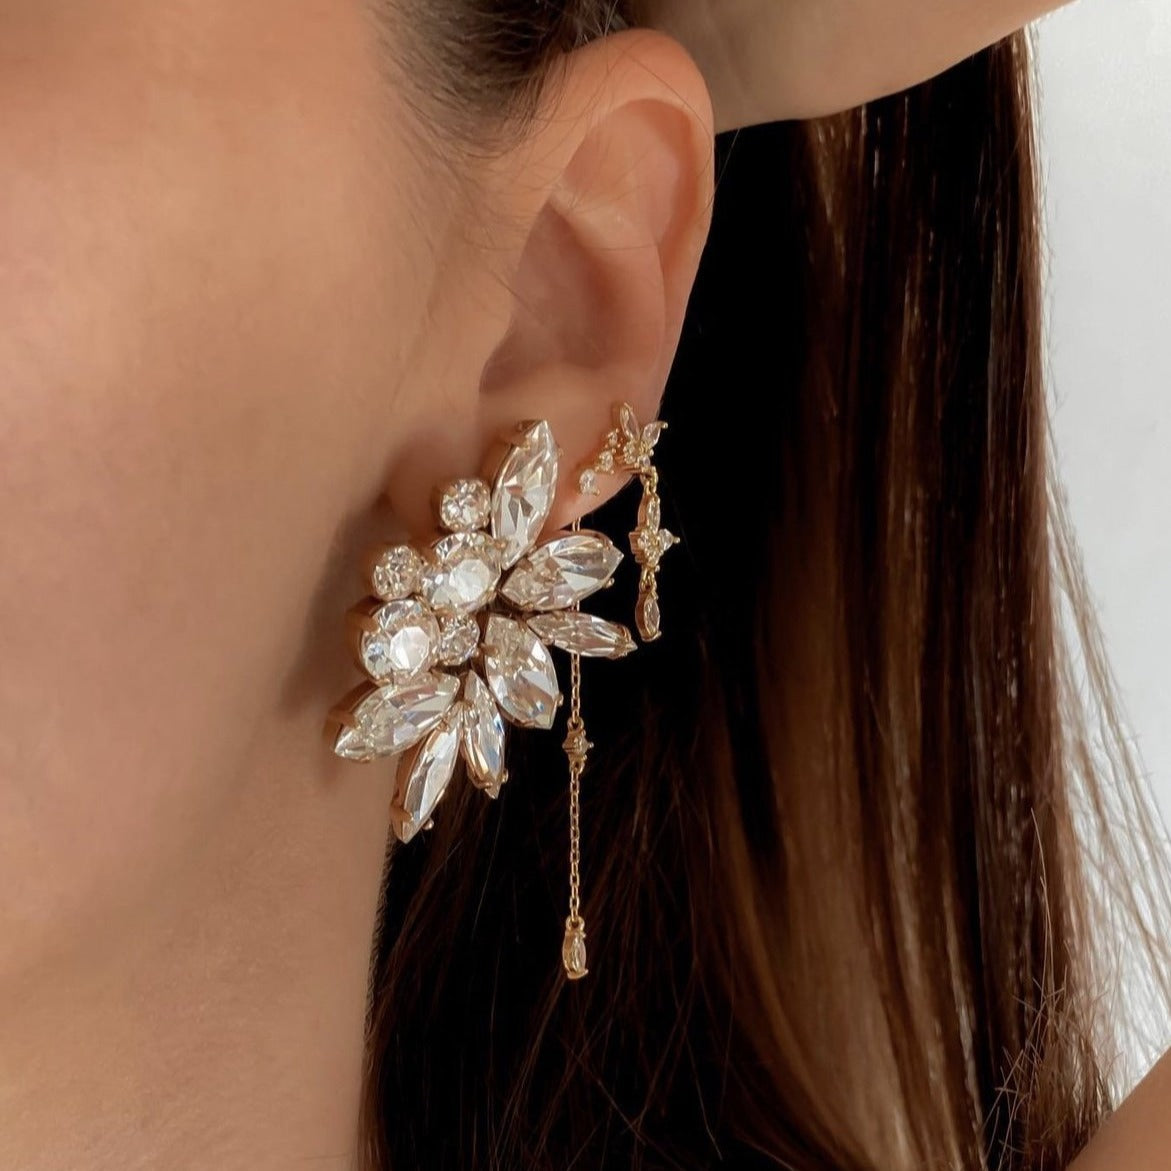 Monika earrings / Crystal clear